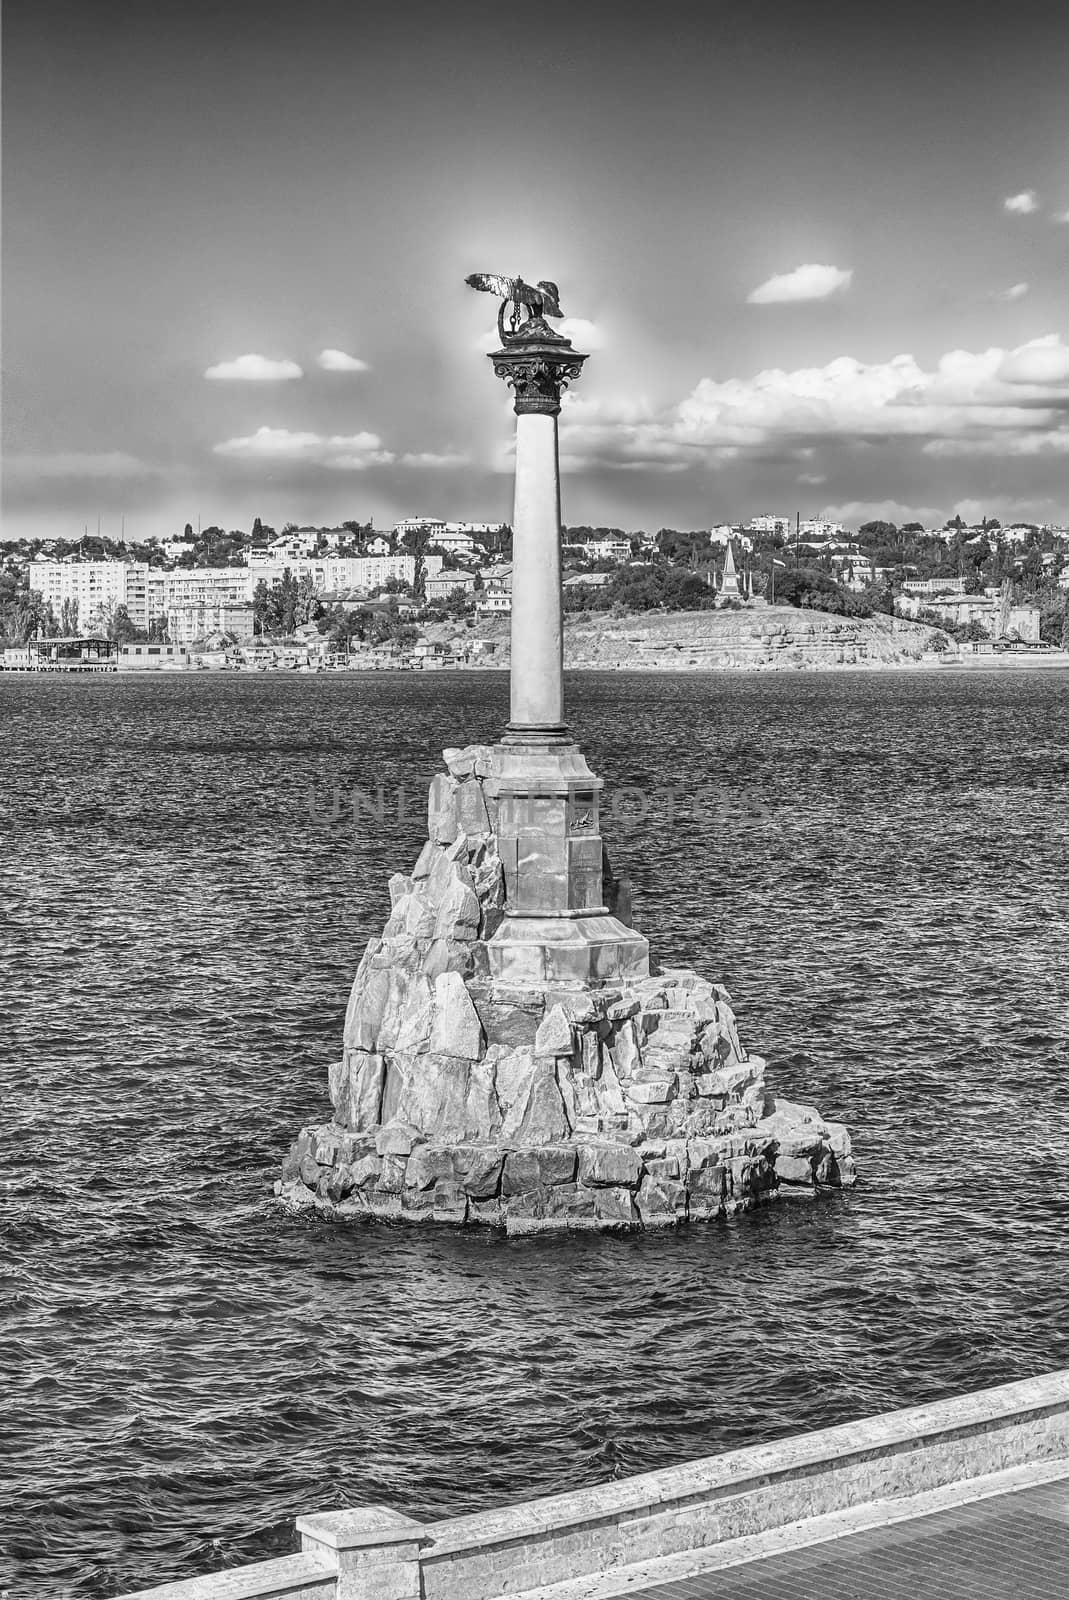 Sunken ships memorial, iconic monument in Sevastopol, Crimea by marcorubino